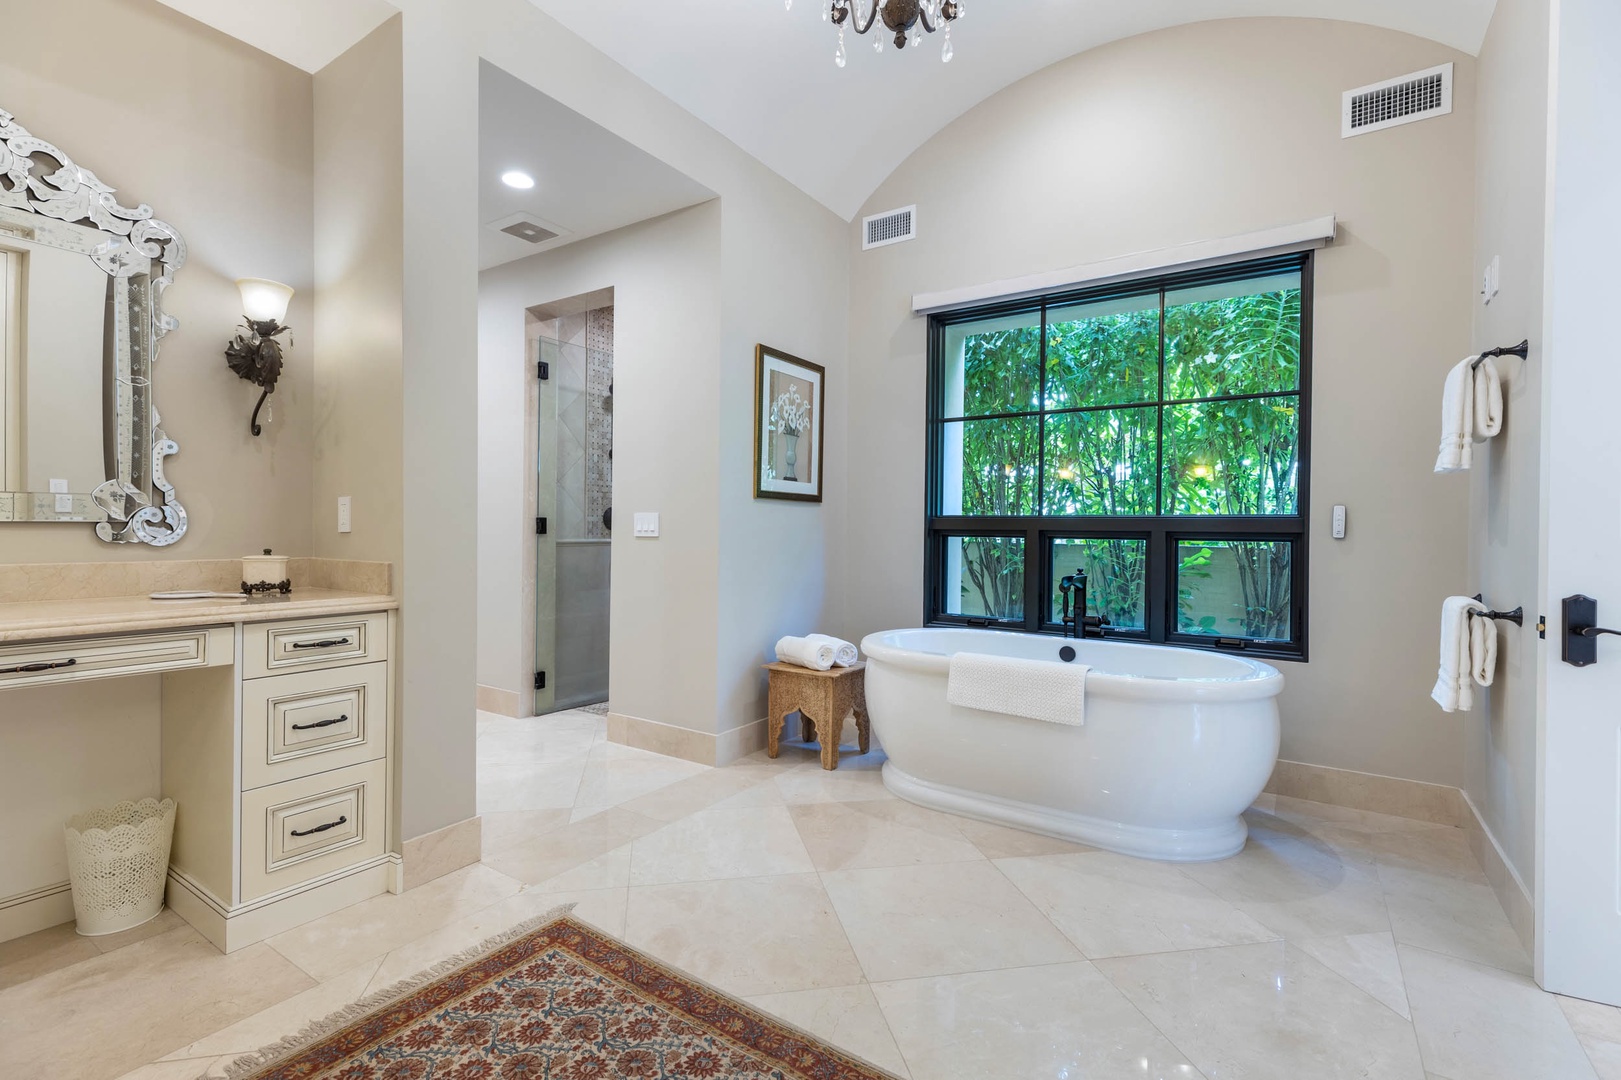 Honolulu Vacation Rentals, Royal Kahala Estate - Spa-like ensuite bathroom with a large soaking tub.